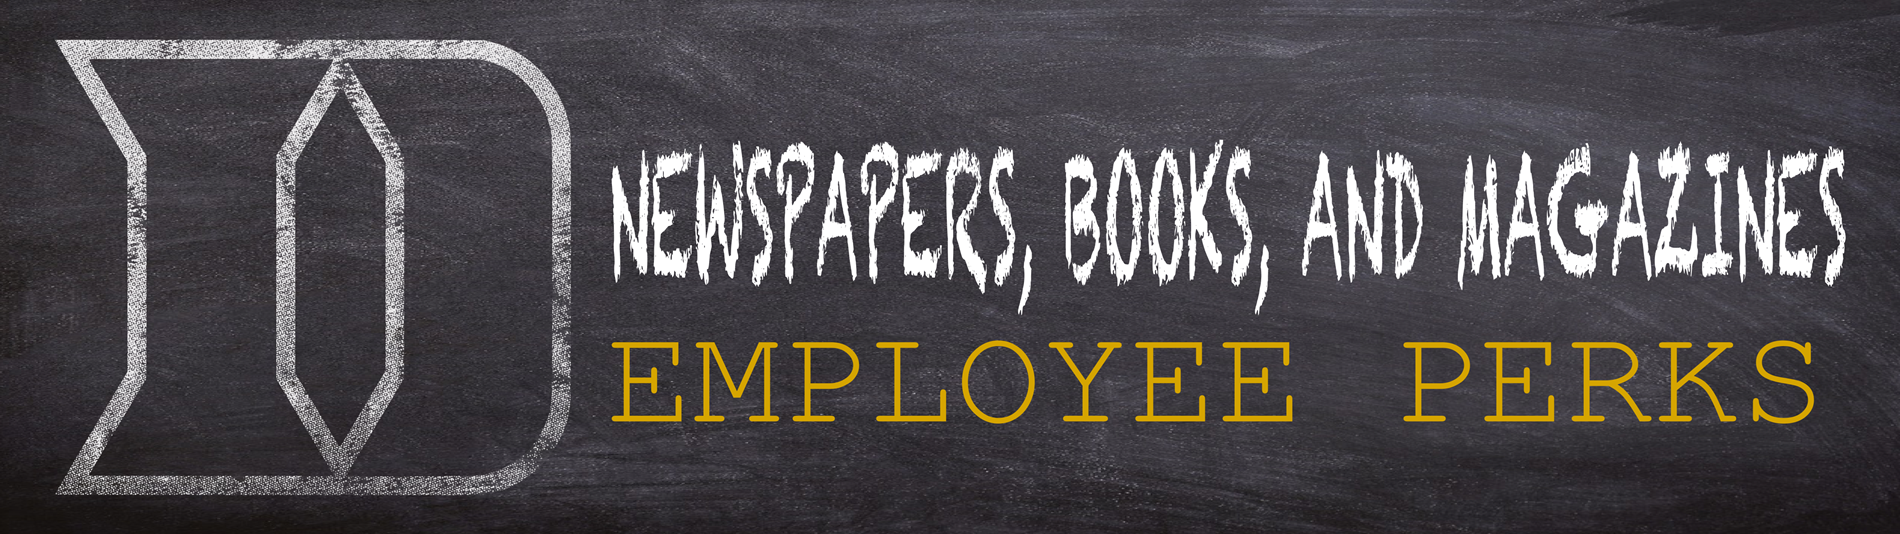 Newspapers Books and Magazines Employee Perks Logo